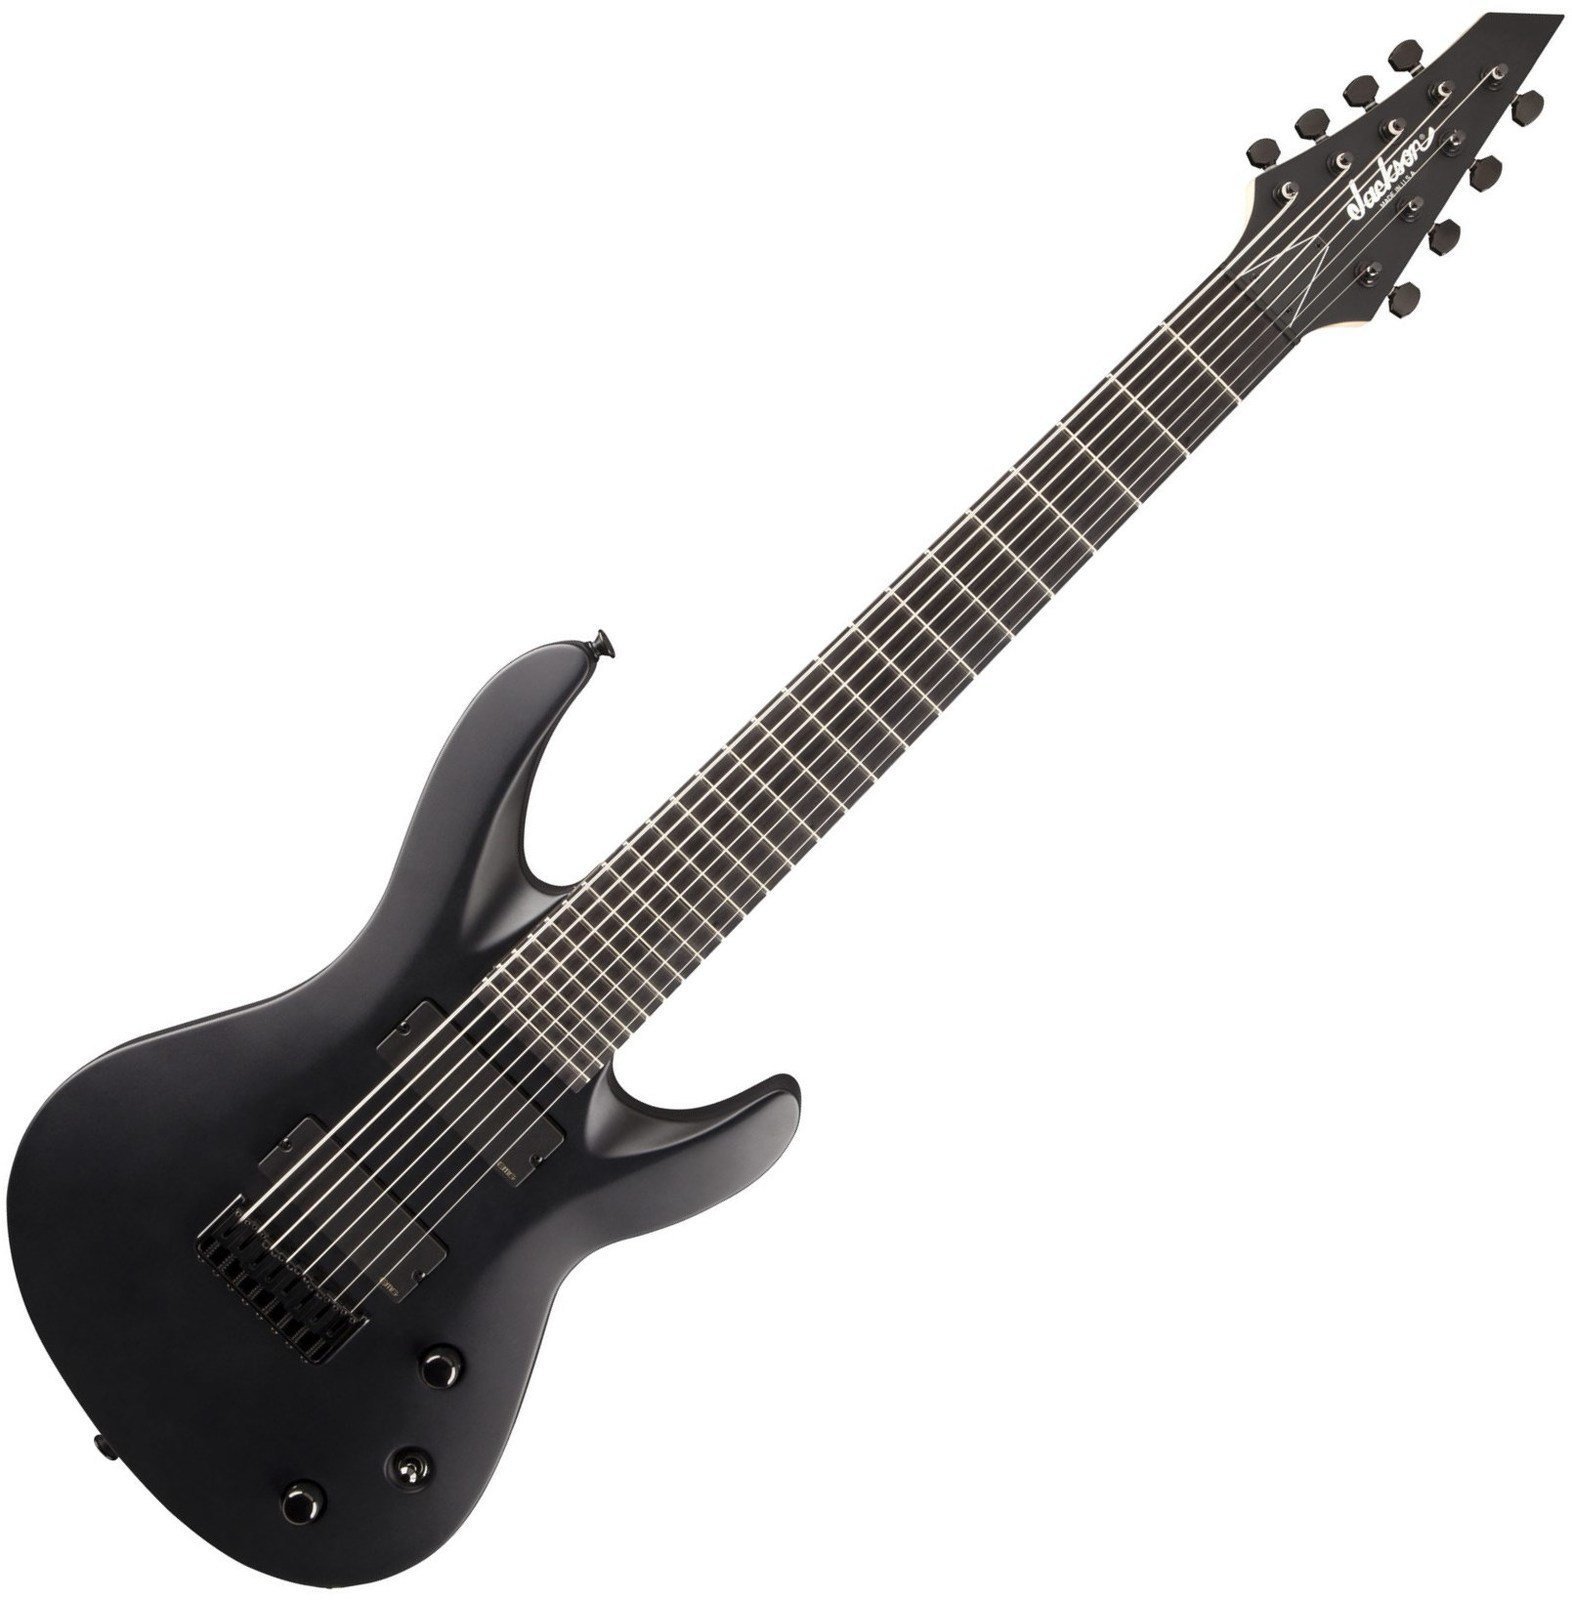 8-saitige E-Gitarre Jackson USA Select B8 Deluxe Satin Black